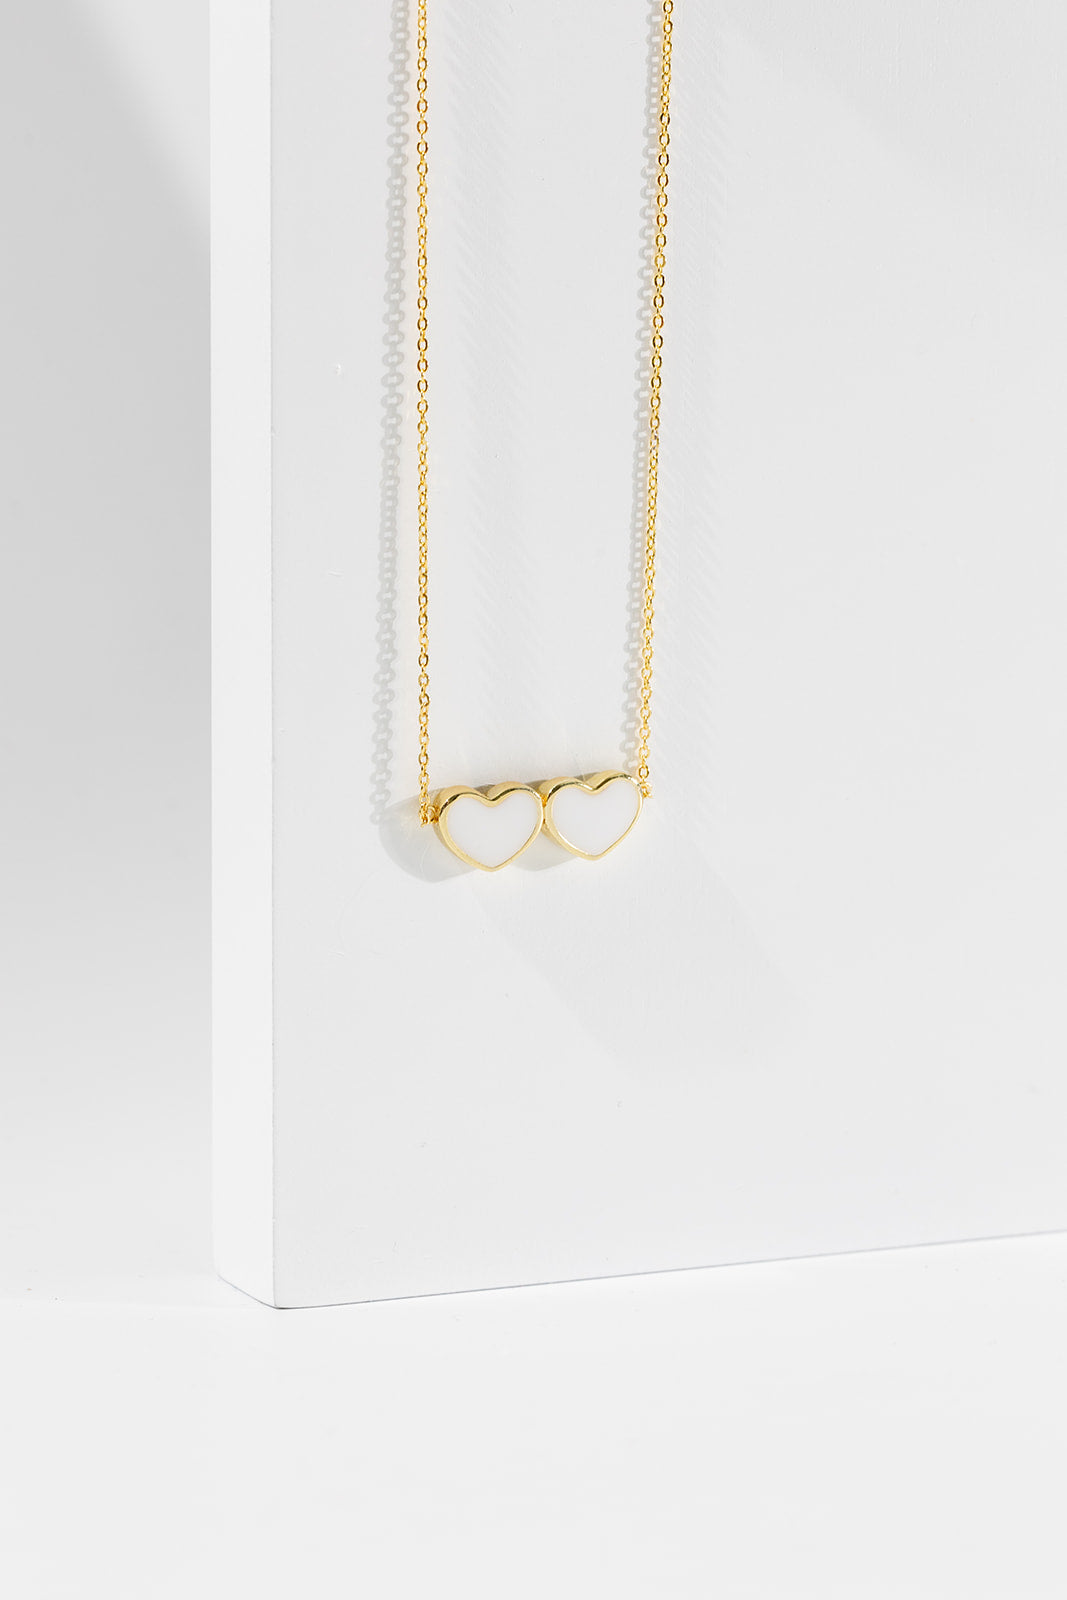 Breastmilk Heart Strings Necklace - Gold